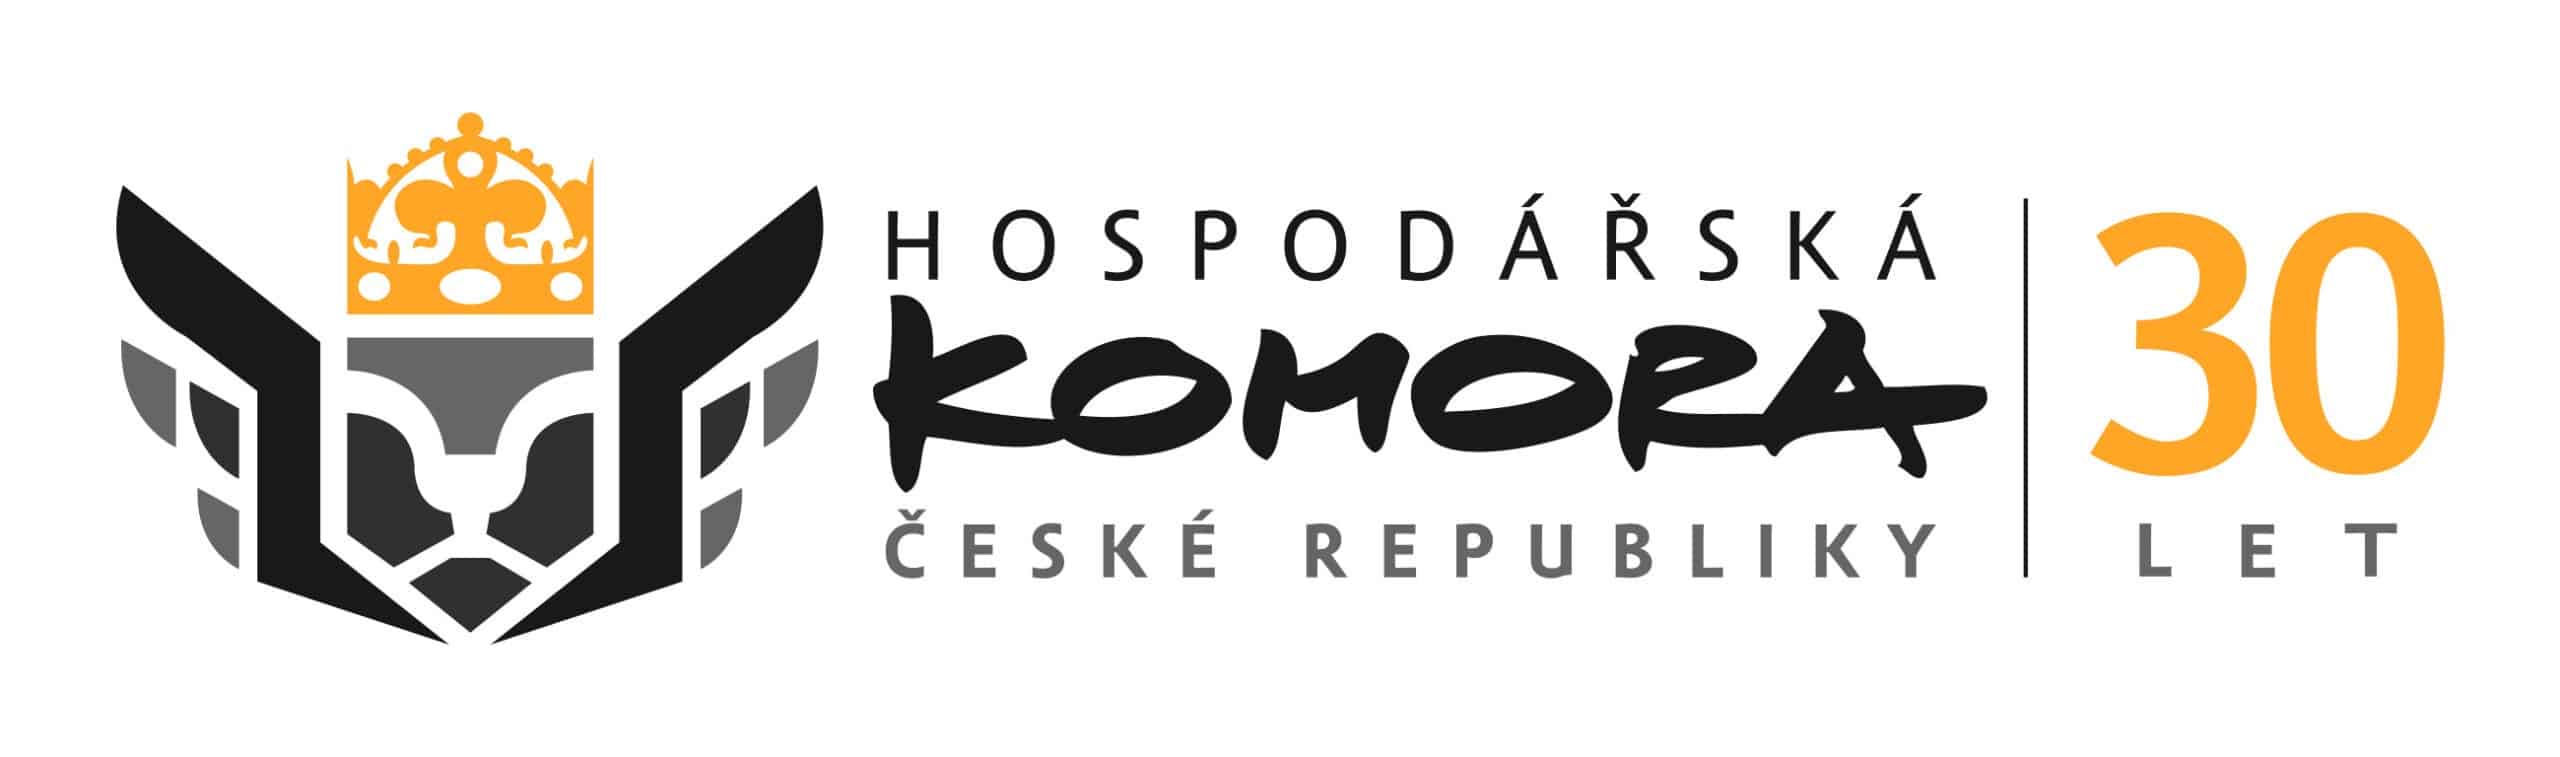 hospodarska-komora-logo